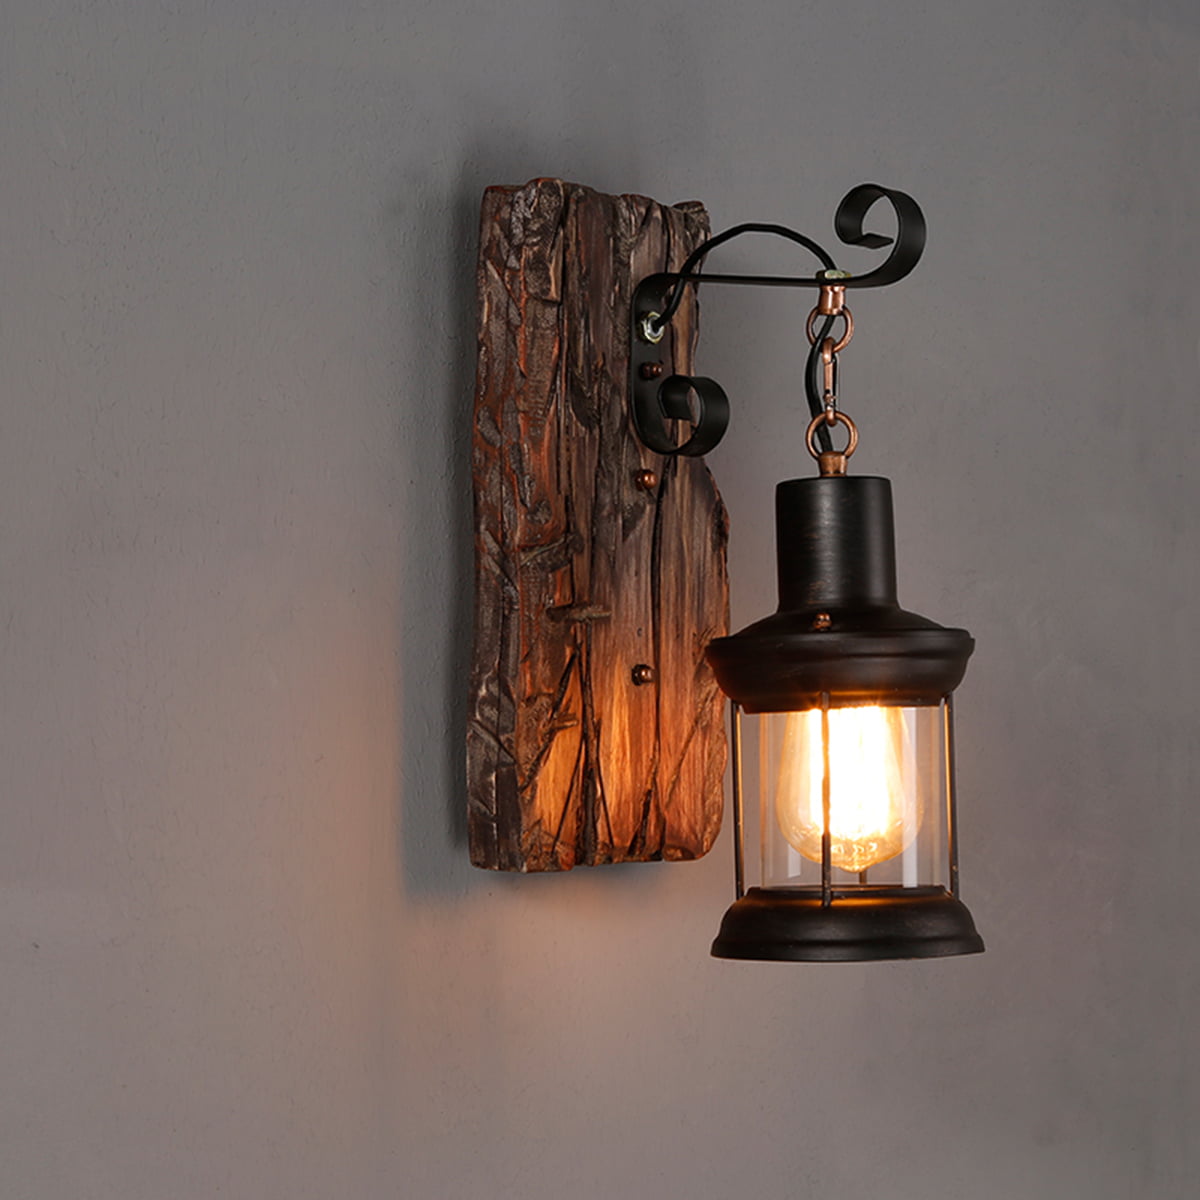 Retro Design Lamp Loft Iron Industrial Rustic Sconce Wall Light Lamp New!!. 